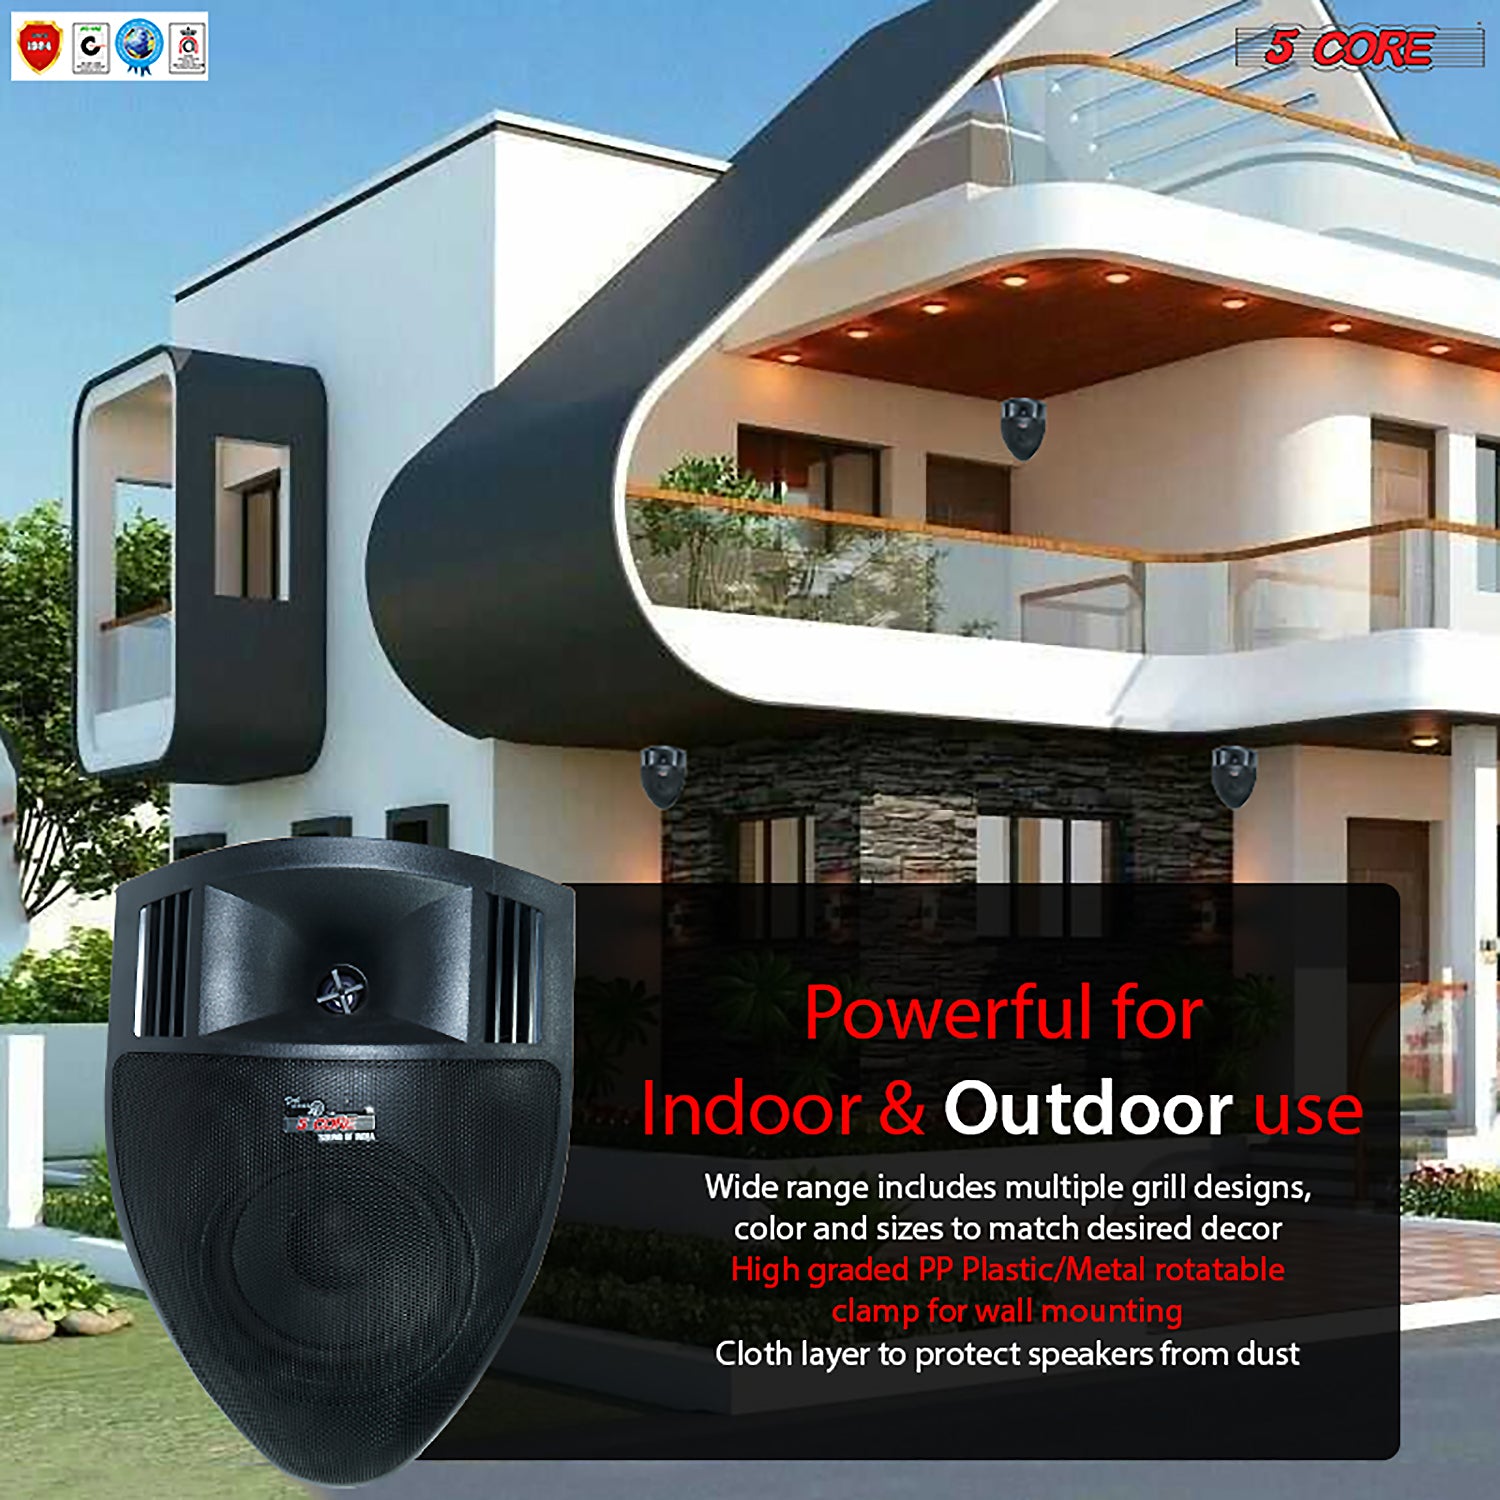 5 Core Outdoor Speaker Waterproof System Wall Mounted Indoor Patio Backyard Surround Sound Home